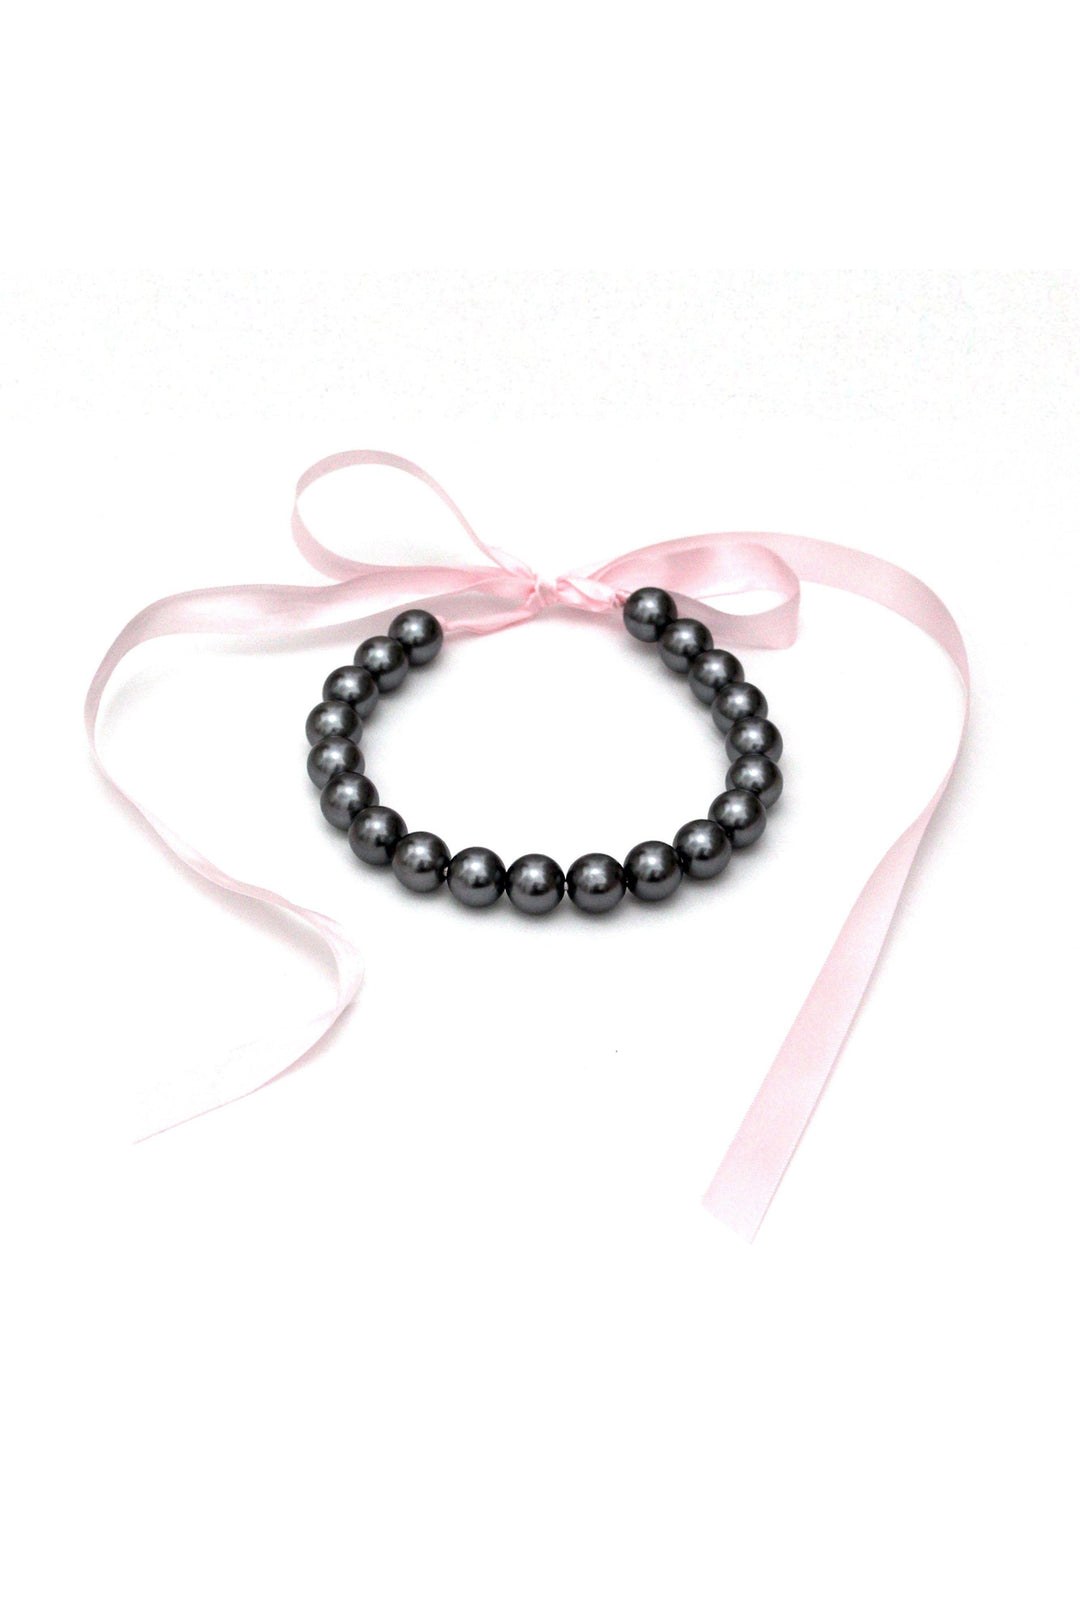 Mademoiselle Bowtye-Body Jewelry-Tyes By Tara-Pink-O/S-SEXYSHOES.COM